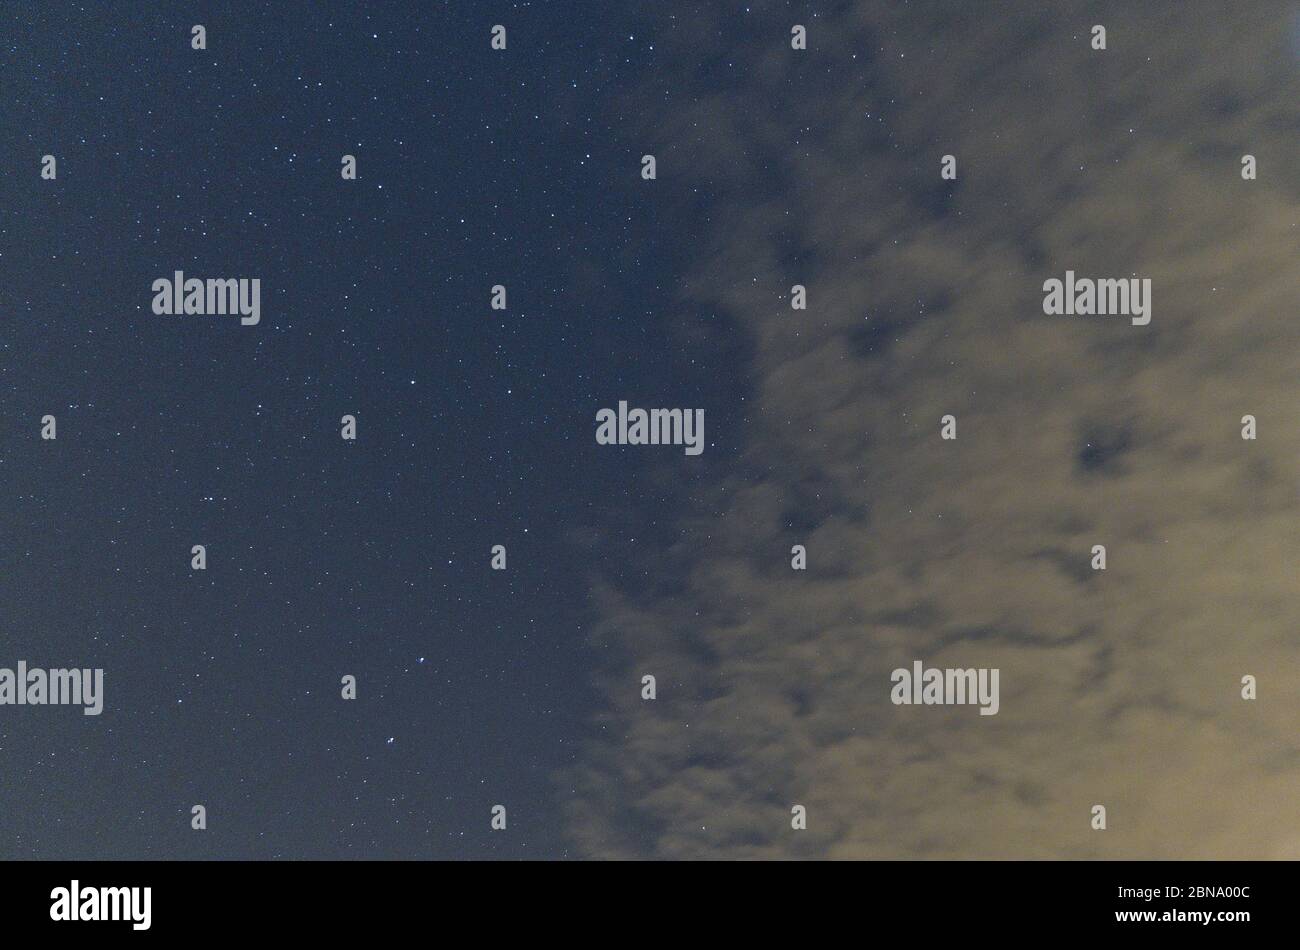 Notte stellata e nuvole. Fotografia notturna Foto Stock